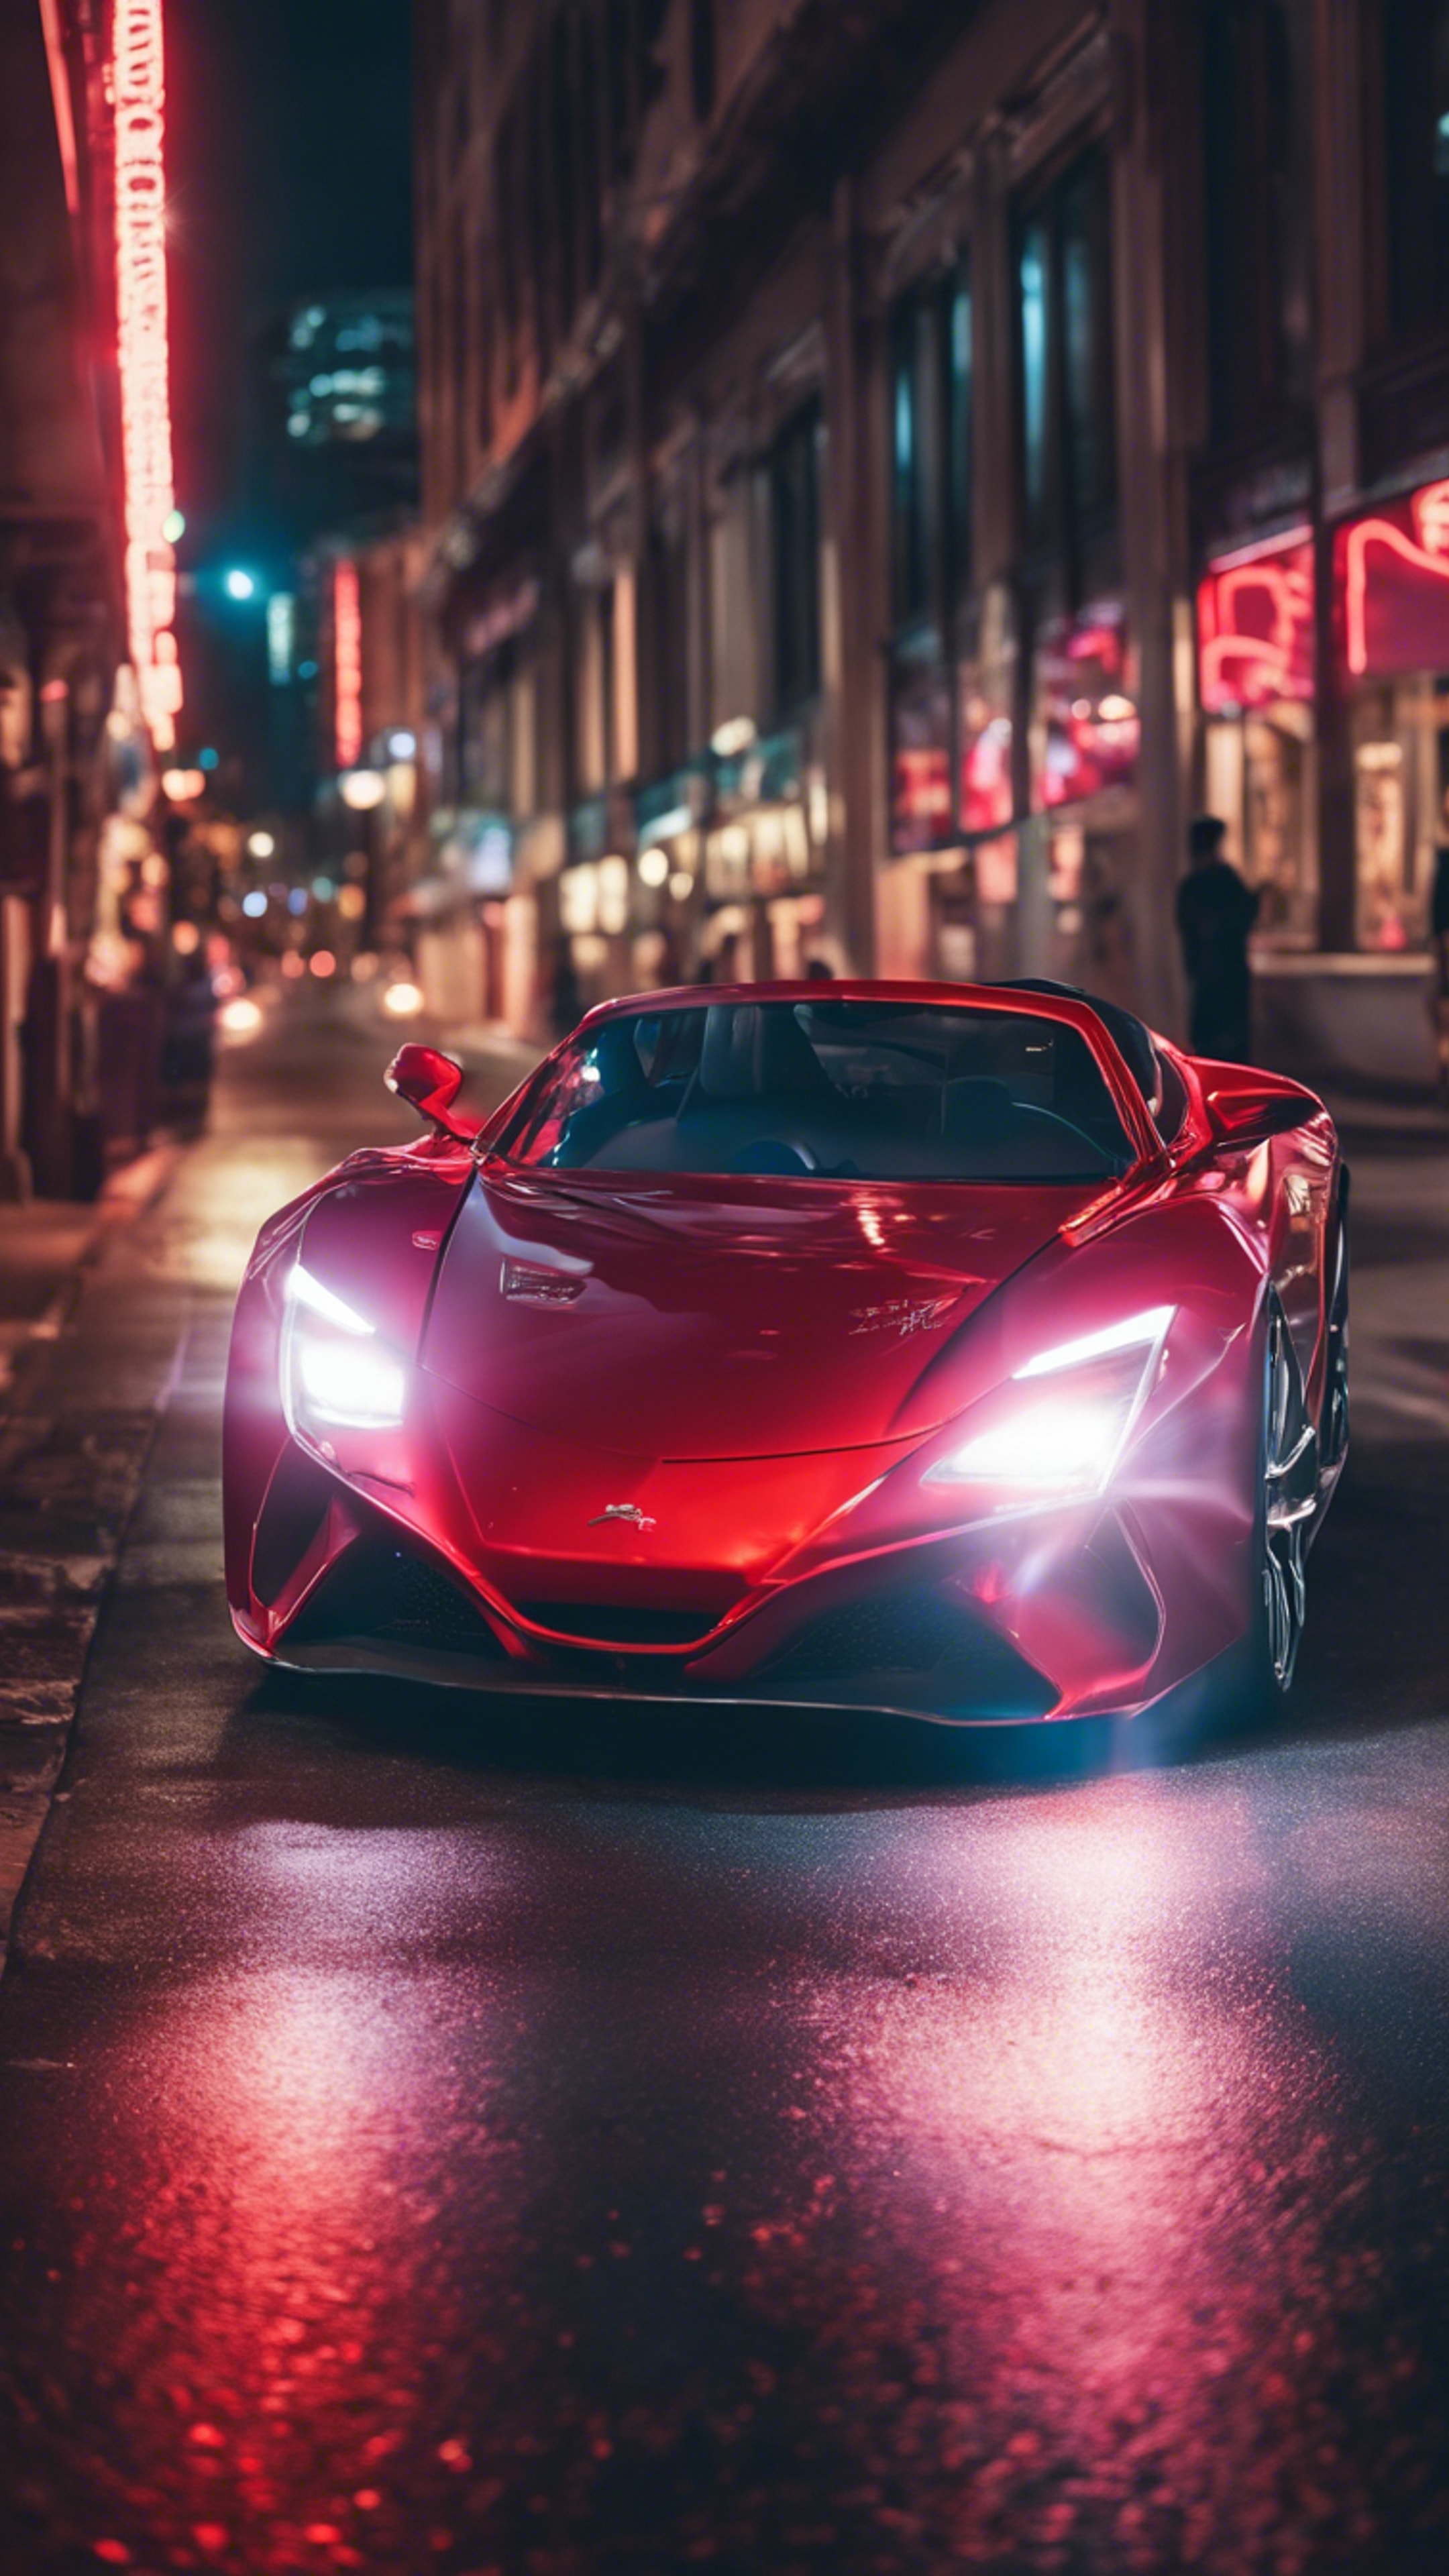 A sleek, cool red neon sports car zipping along a nighttime city street. Обои[c8ae8bc93cf04b2eb441]